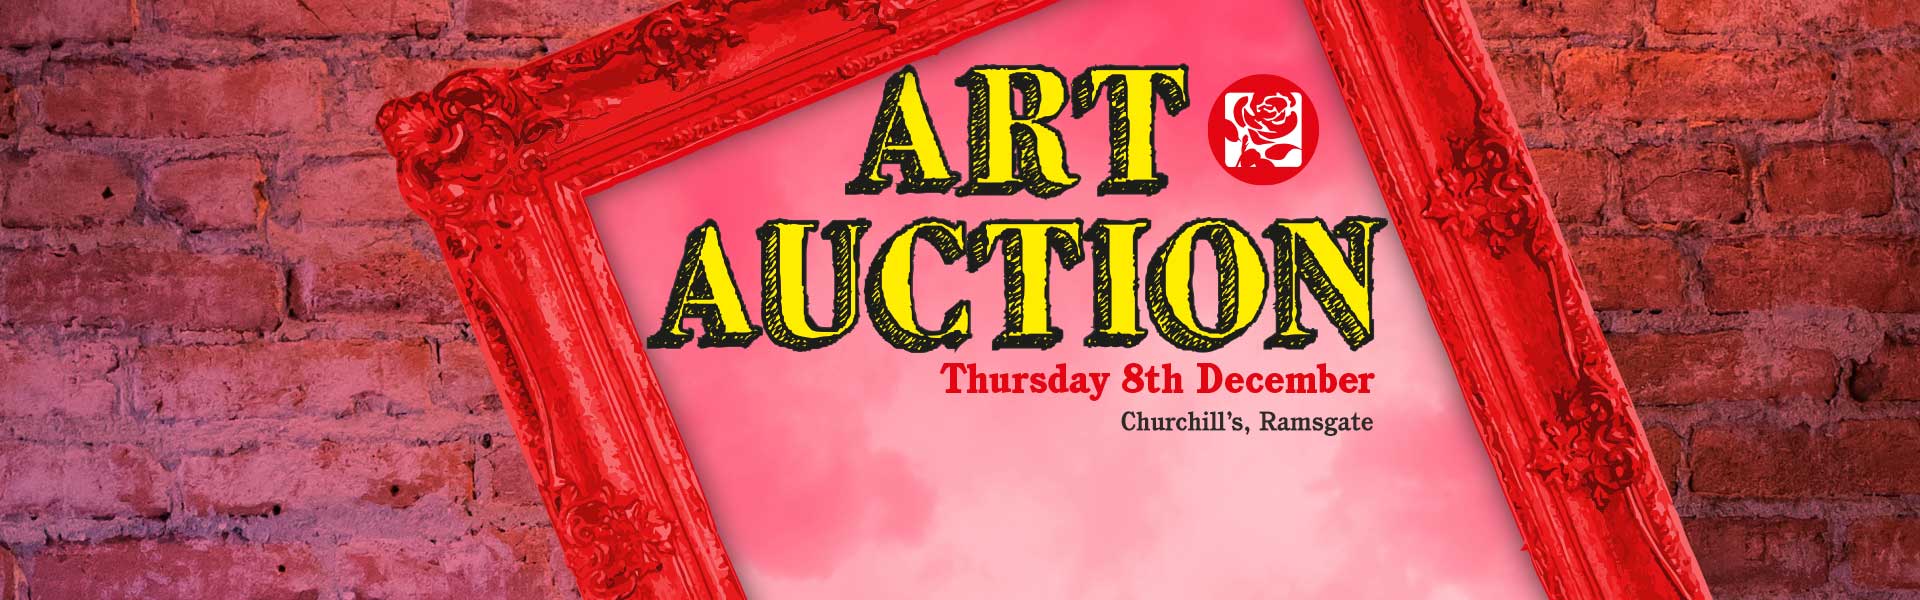 art auction story header image